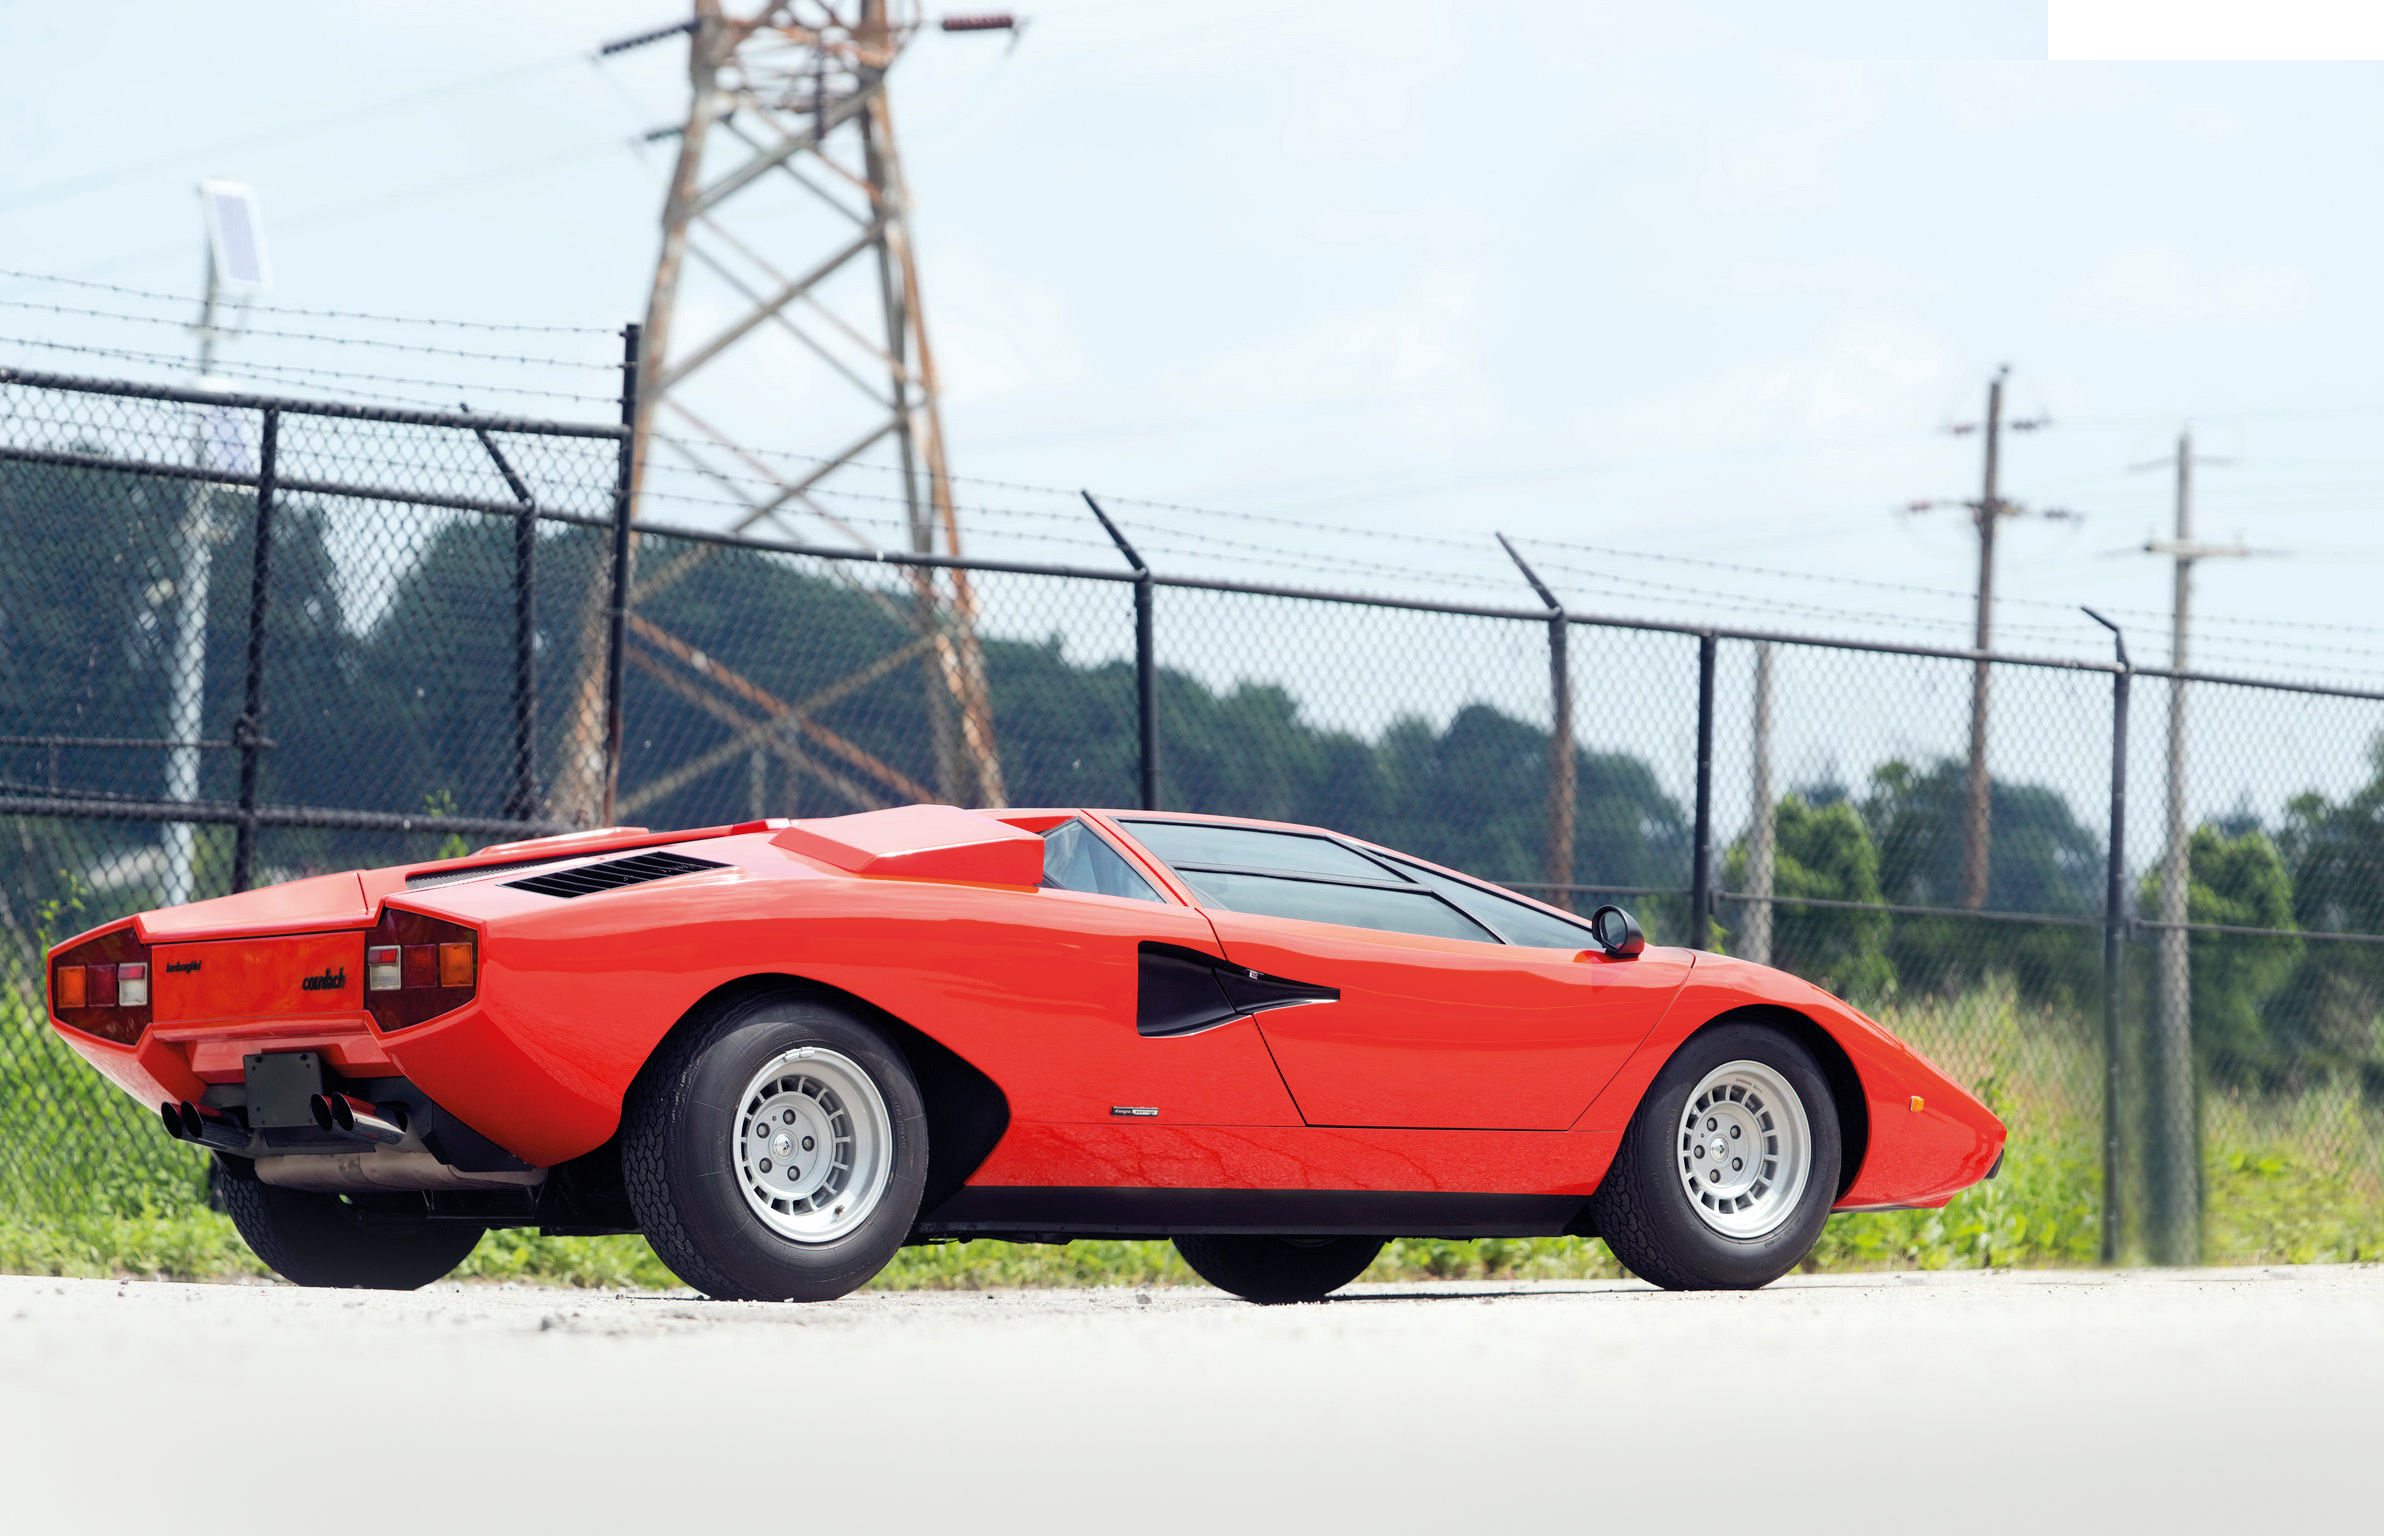 Lamborghini Countach LP400 規格表 國籍:義大利 發表時間:1974年 規格 長 4,140×寬 1,890×高 1,070 mm 引擎:V12 自然進氣 排氣量:3,929 c.c. 馬力:375bhp/8,000rpm 扭力:38.0kgm/6,500rpm